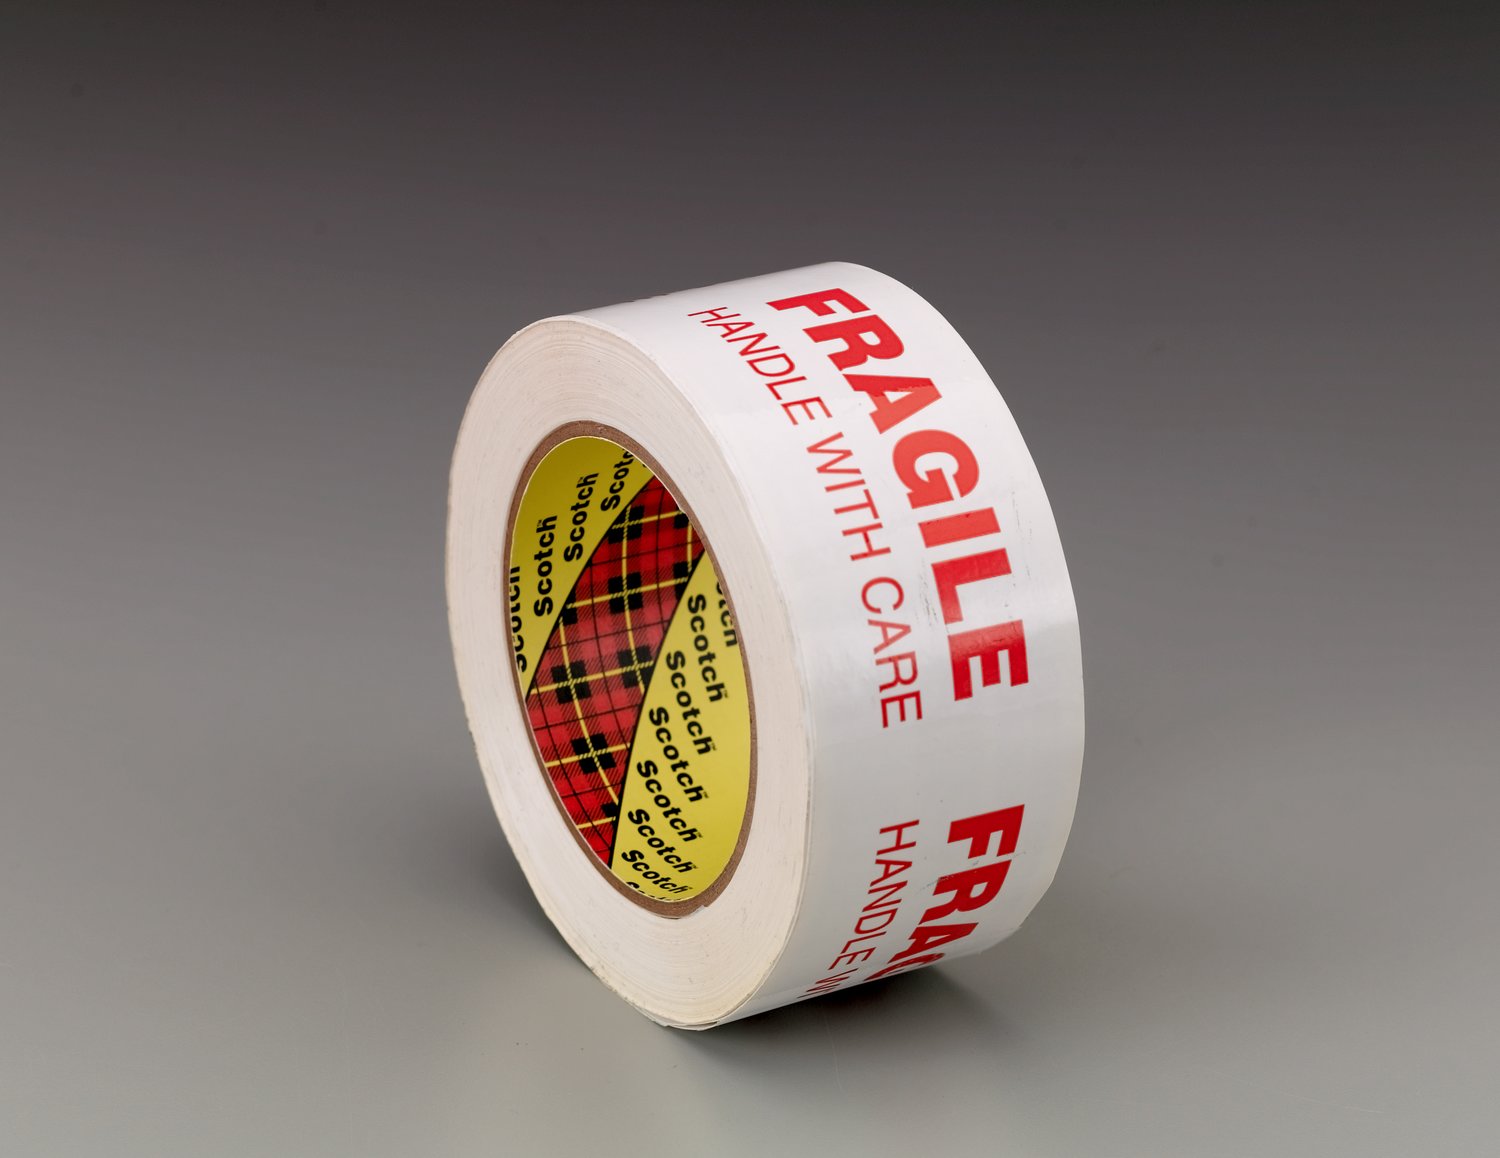 7010312319 - Scotch Printed Message Box Sealing Tape 3772, White, 48 mm x 100 m,
36/Case